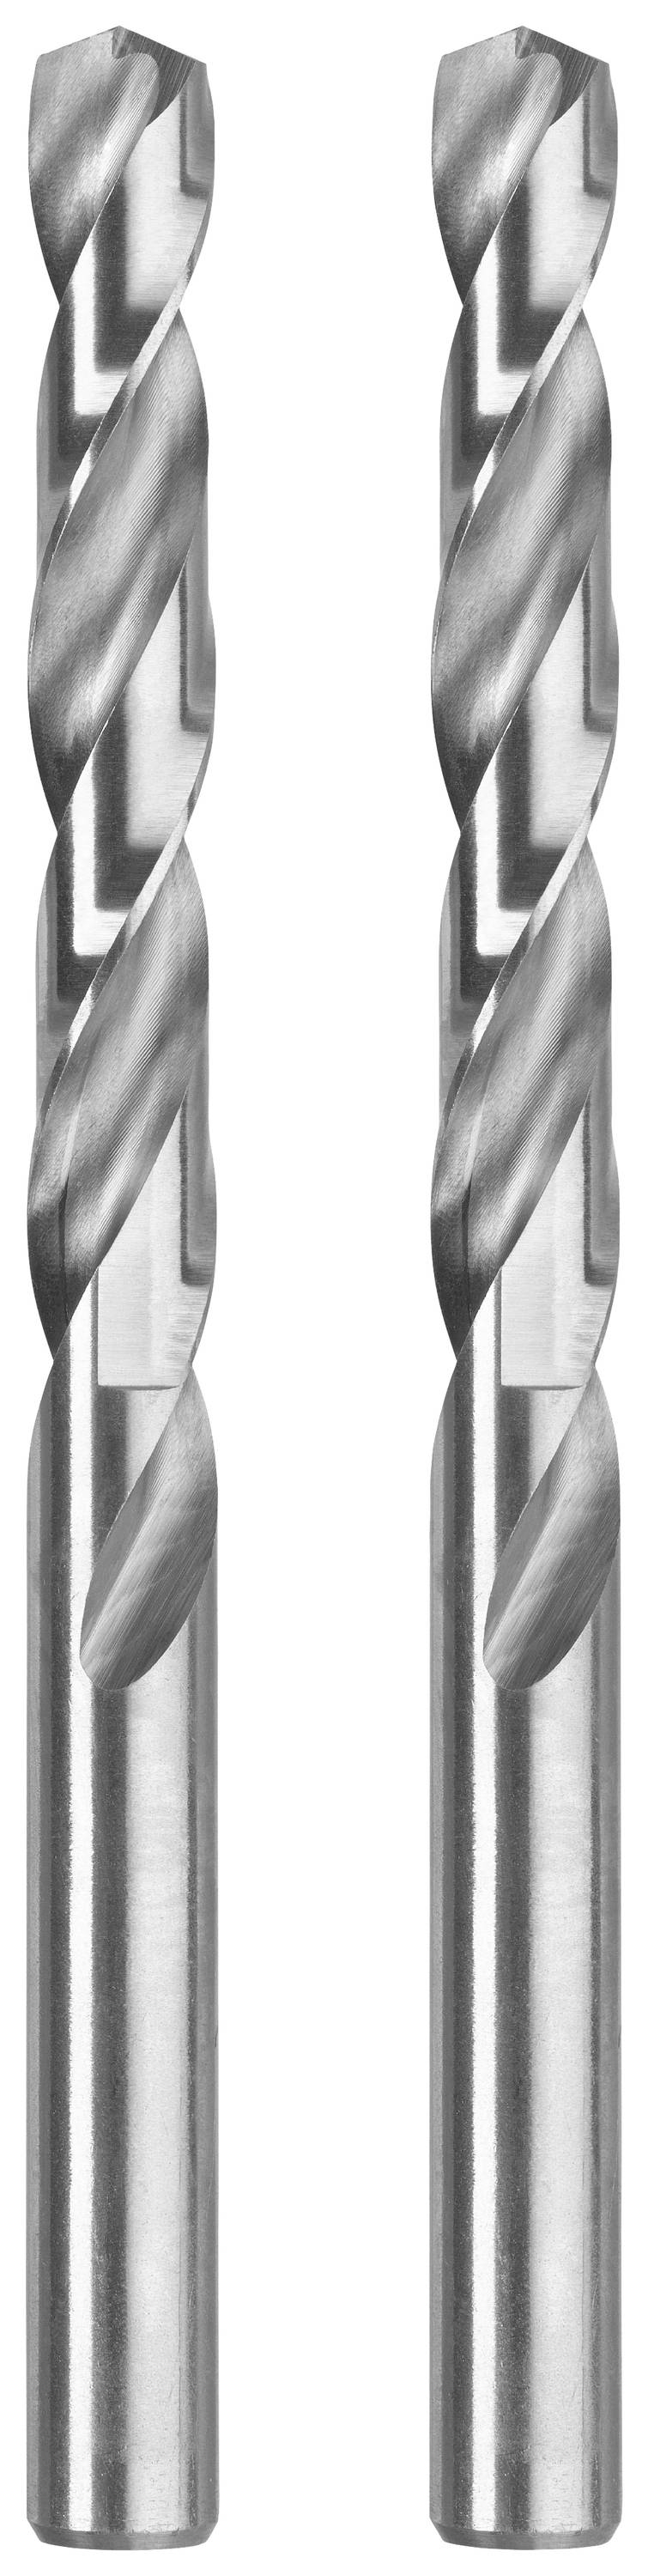 KWB 206520 Metall-Spiralbohrer 2 mm 1 St.